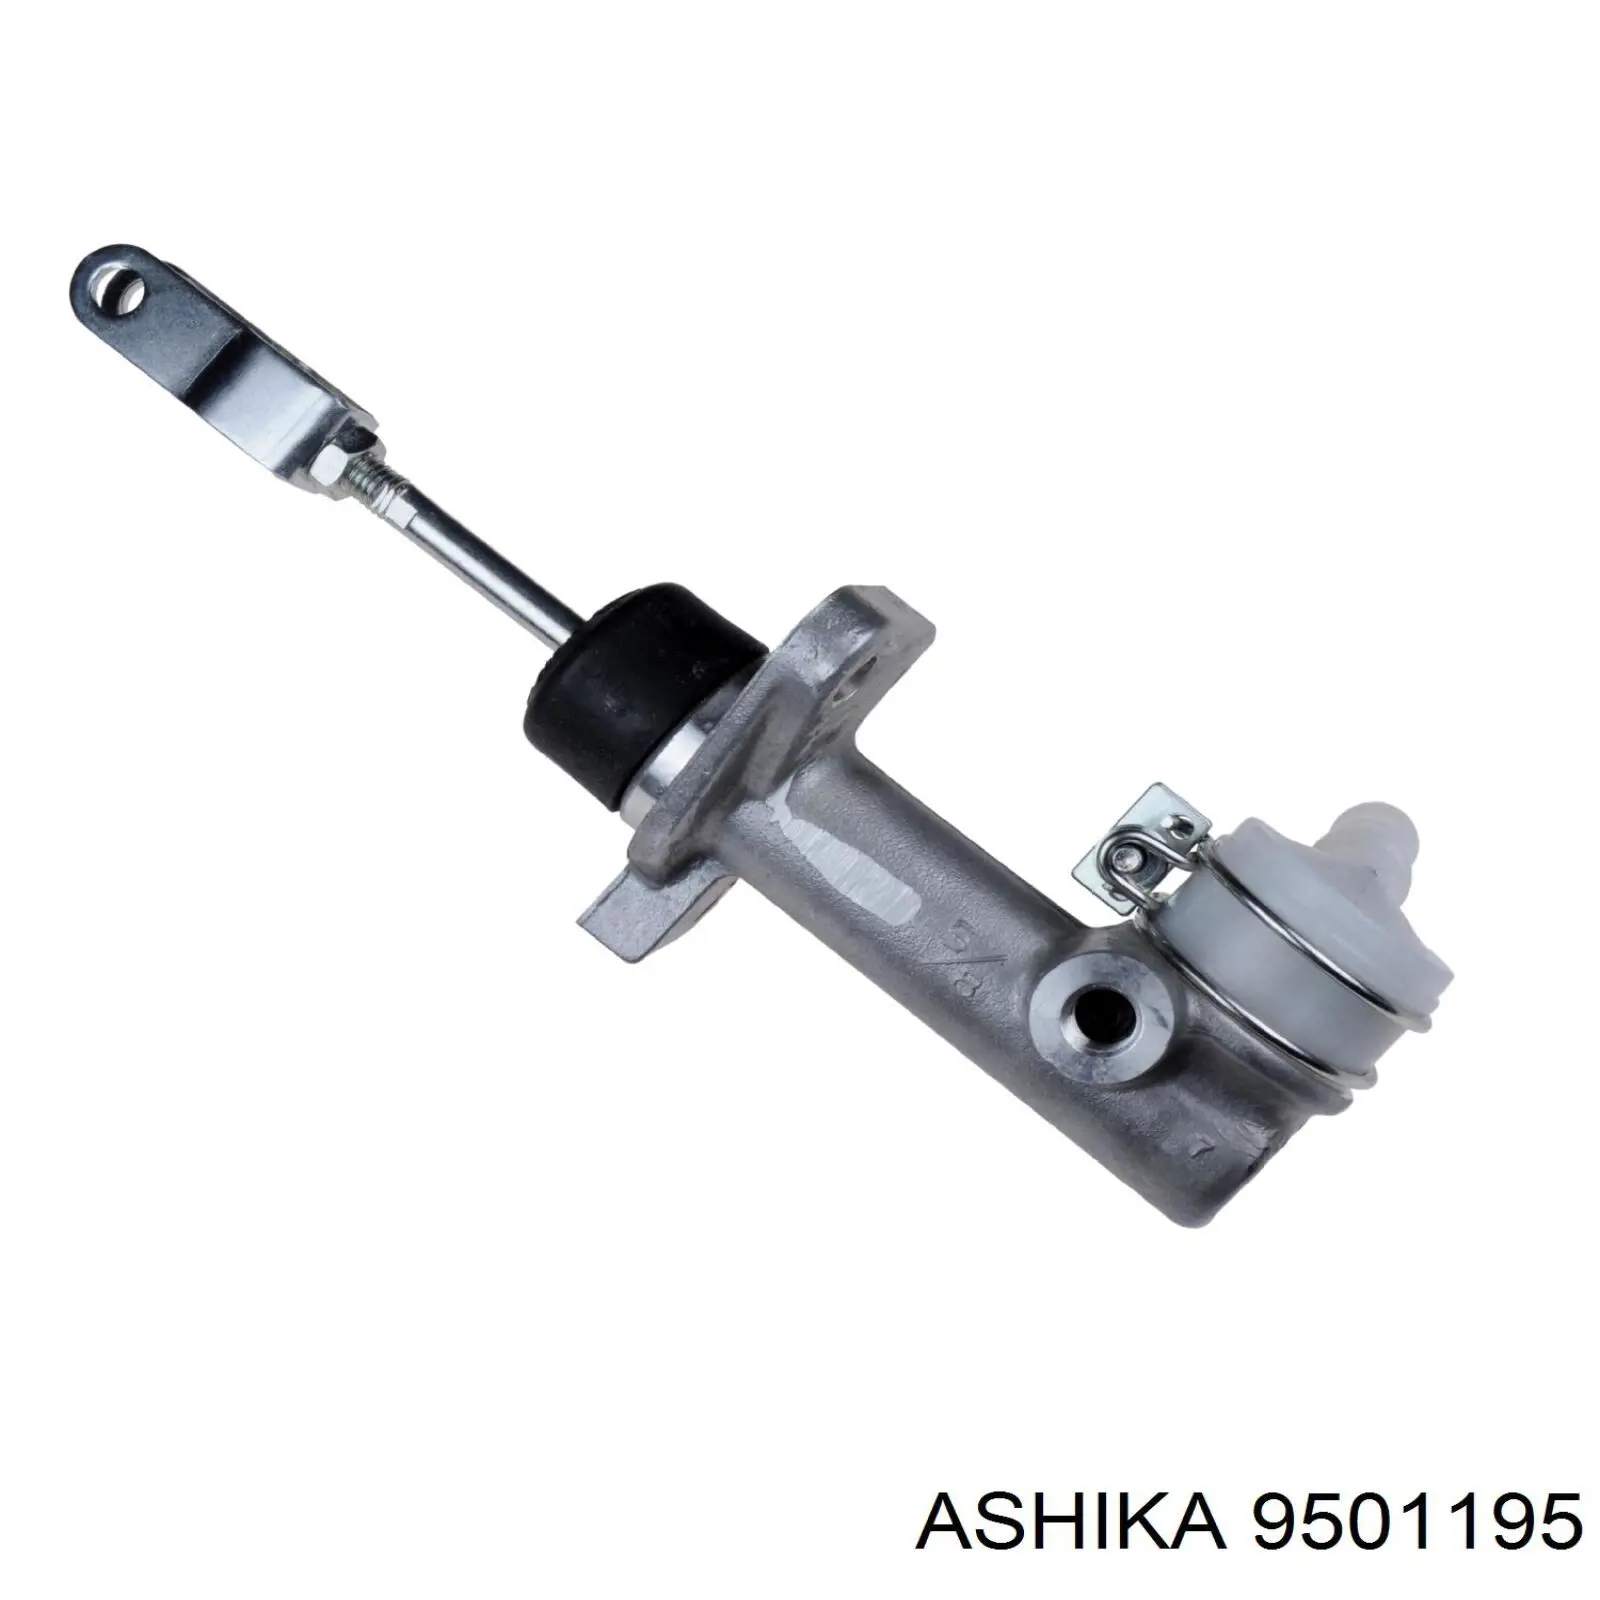 9501195 Ashika cilindro maestro de embrague